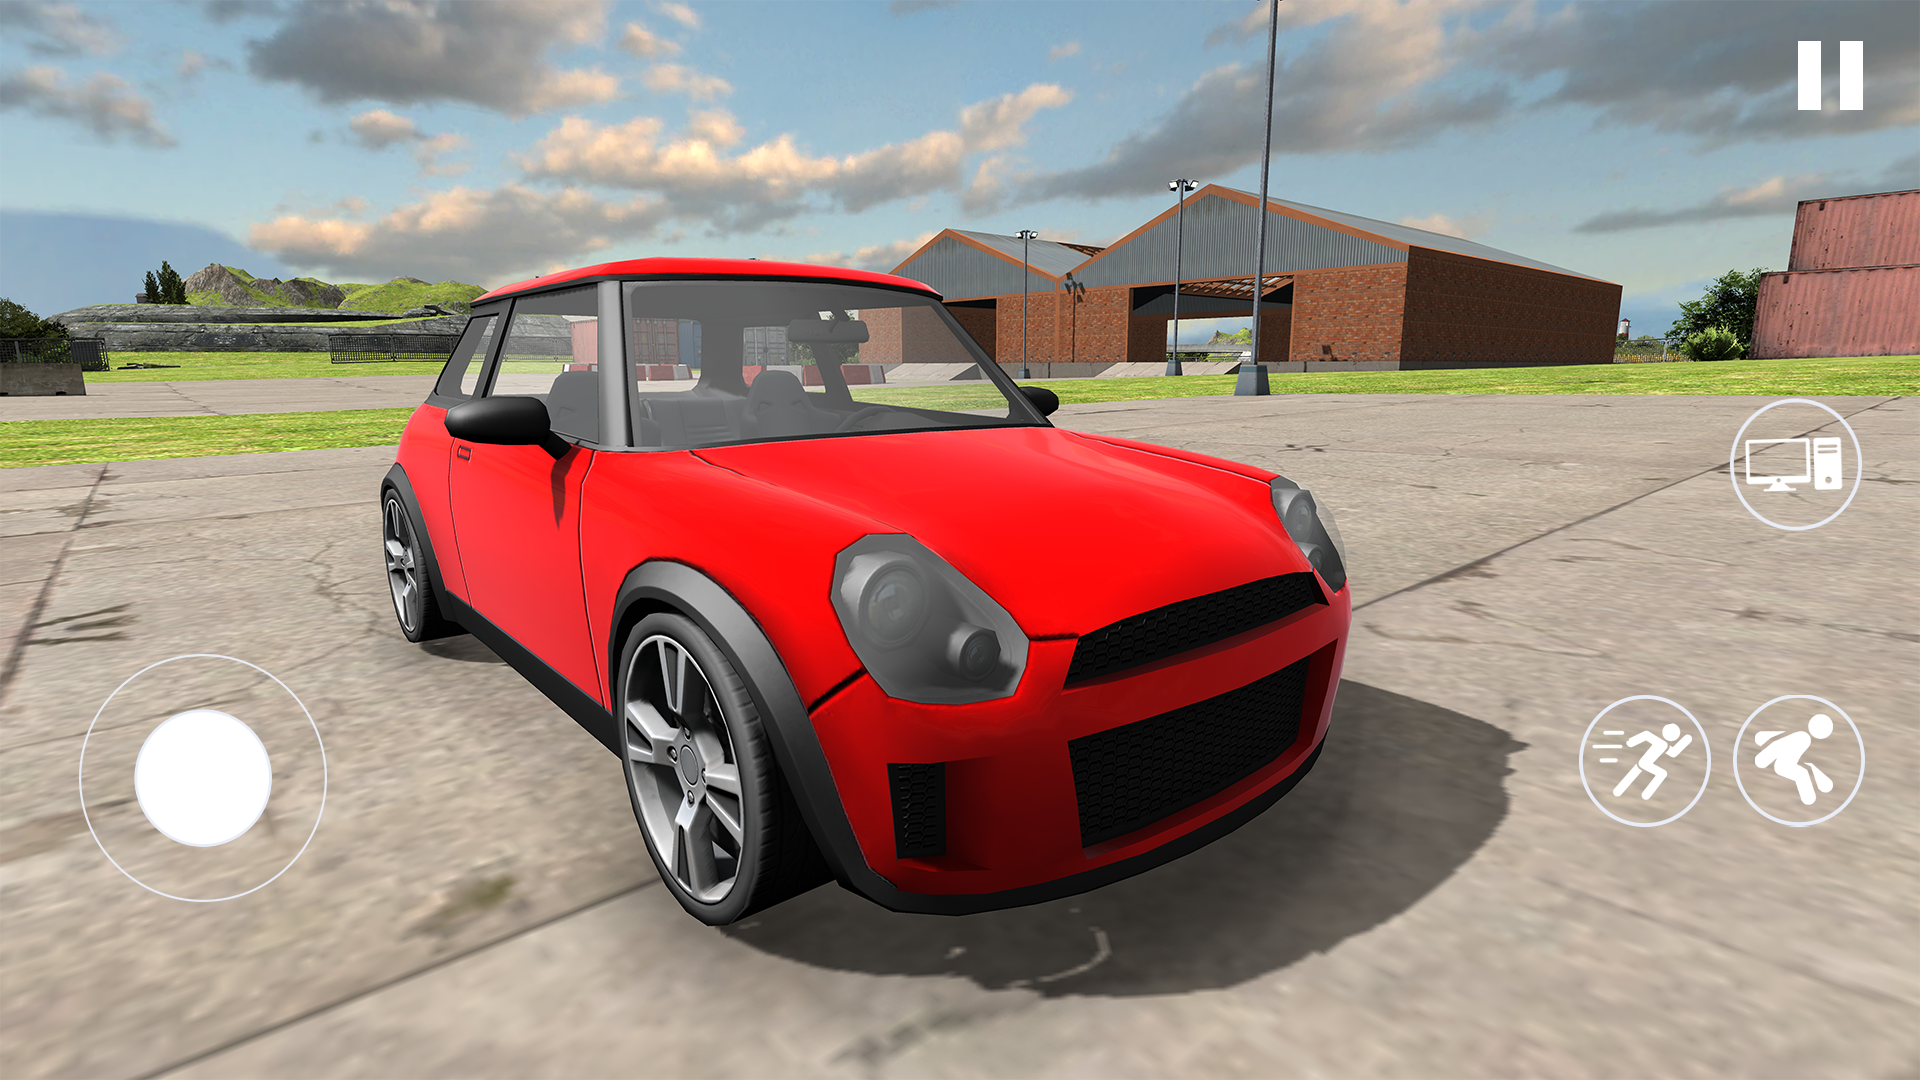 Screenshot 1 of รถยนต์เพื่อการค้า: Saler Simulator 1.4